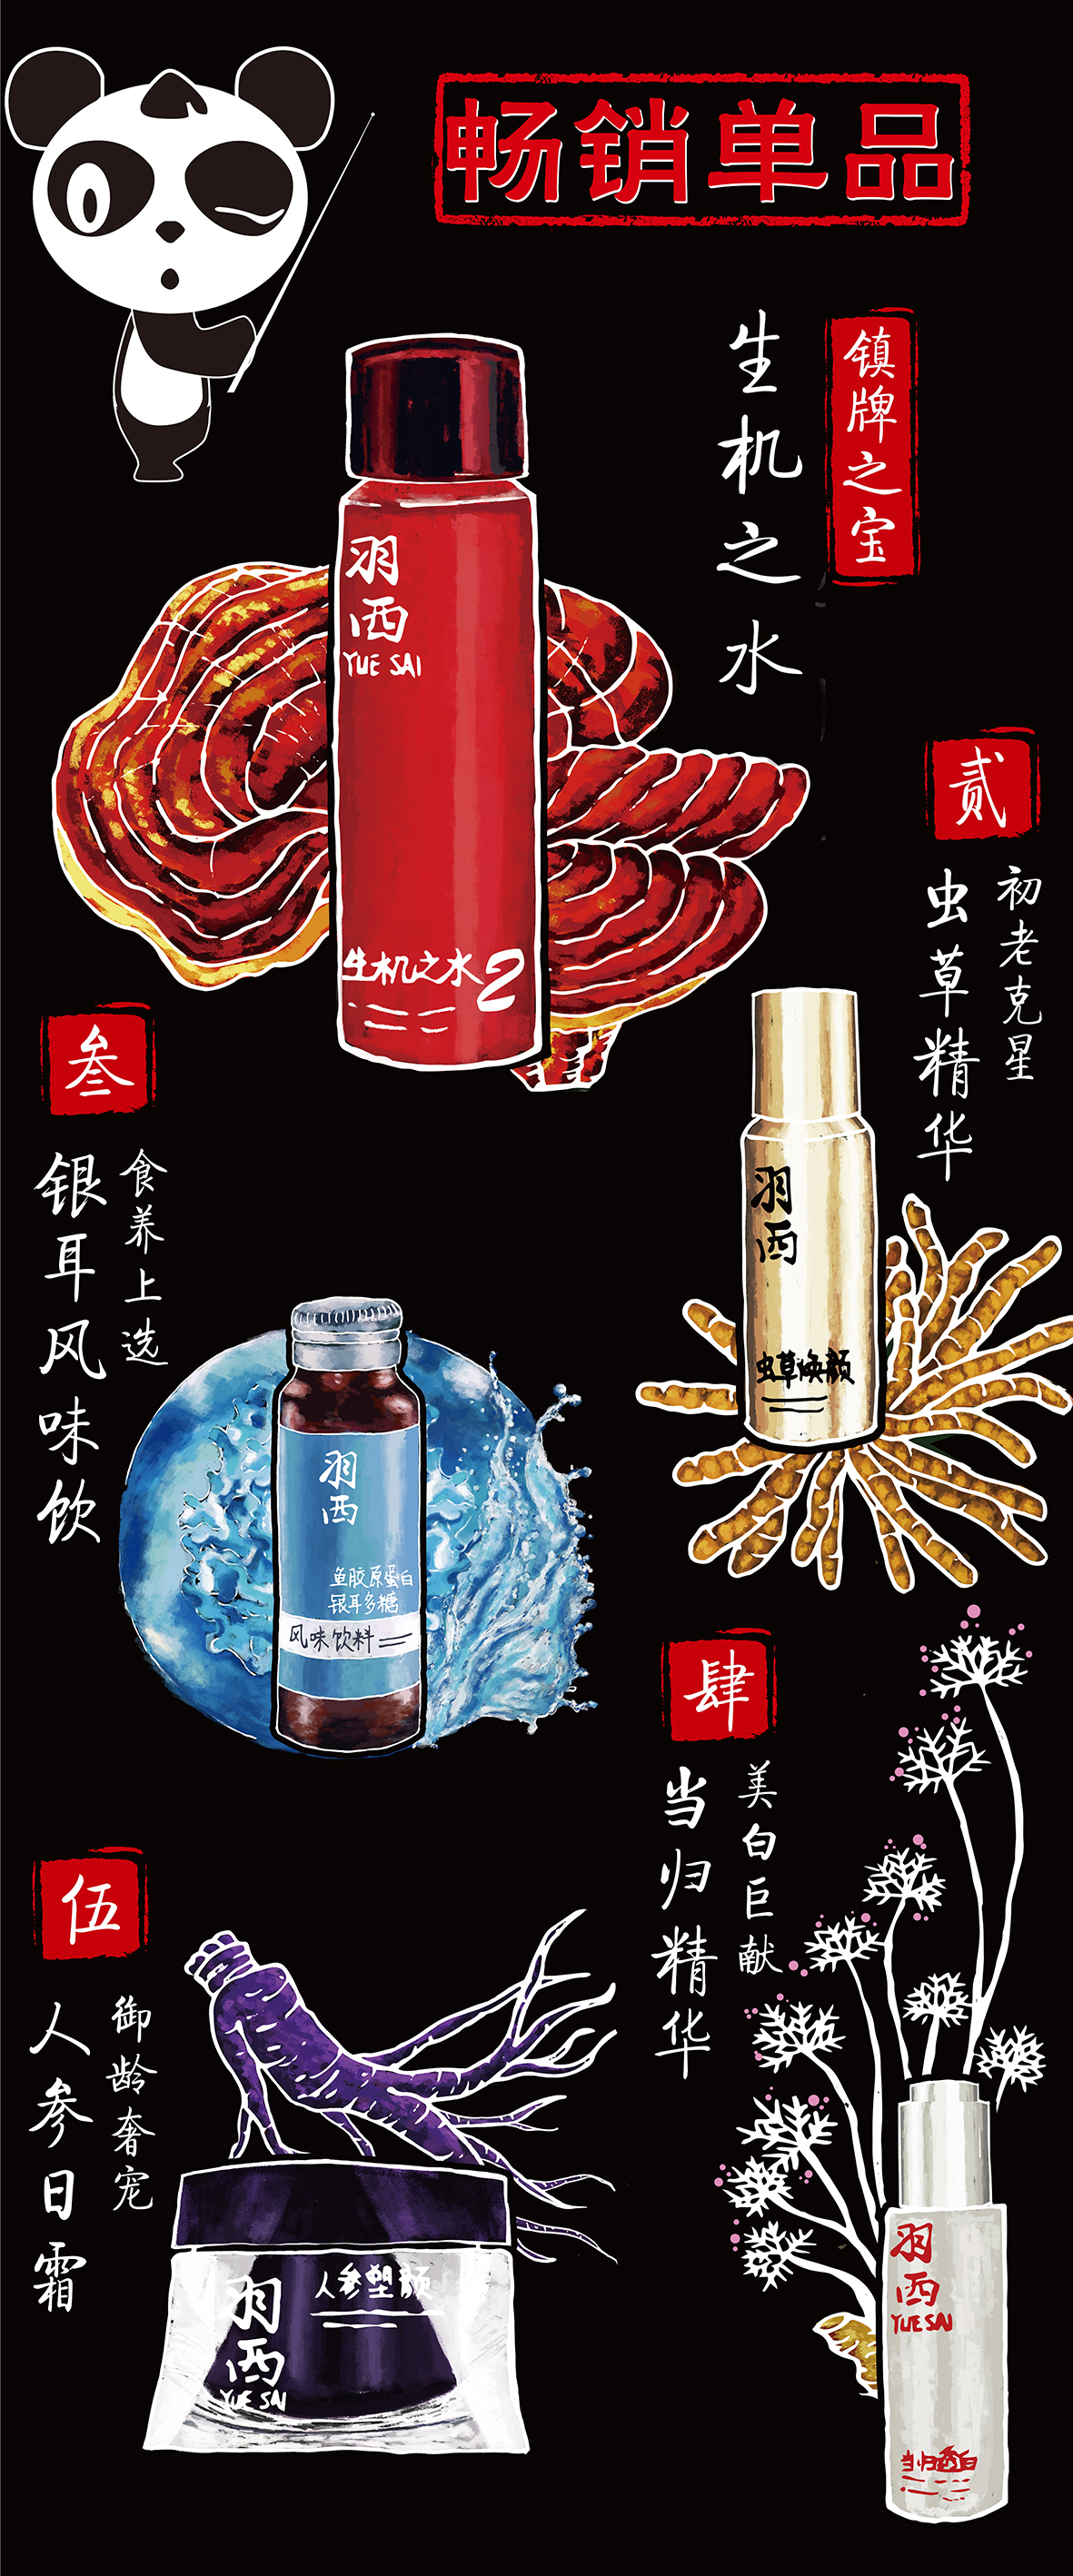 branding  skincare Advertising  advertisement china merchandising topseller